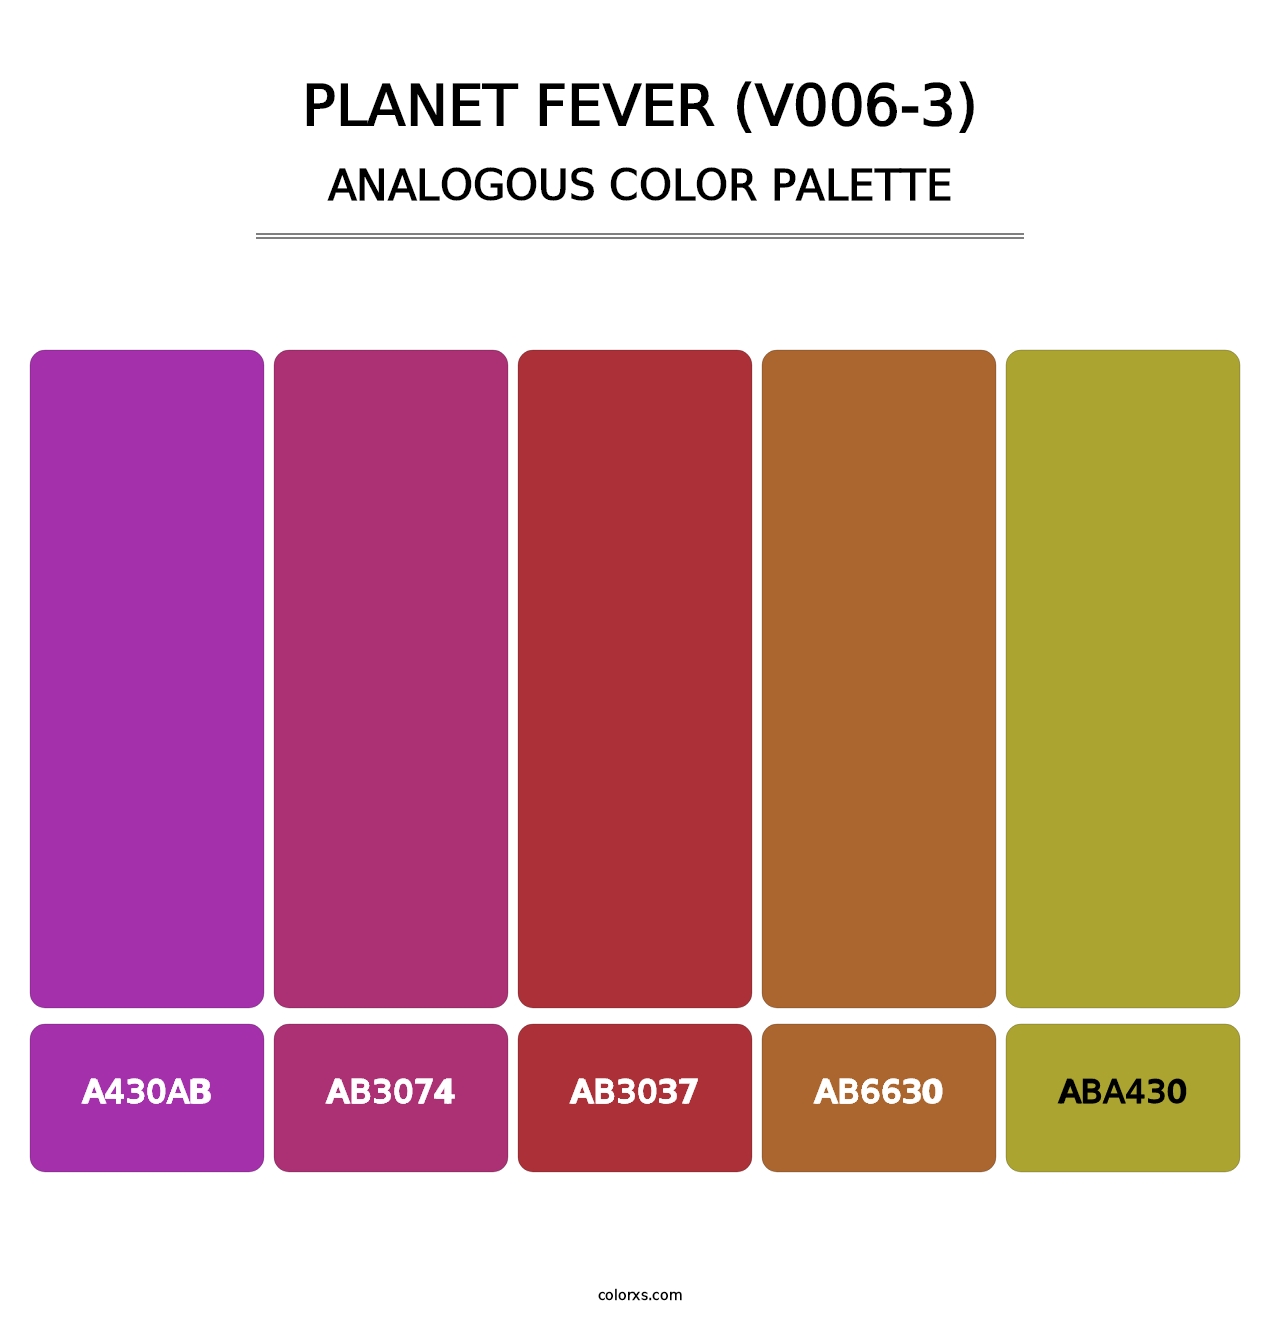 Planet Fever (V006-3) - Analogous Color Palette